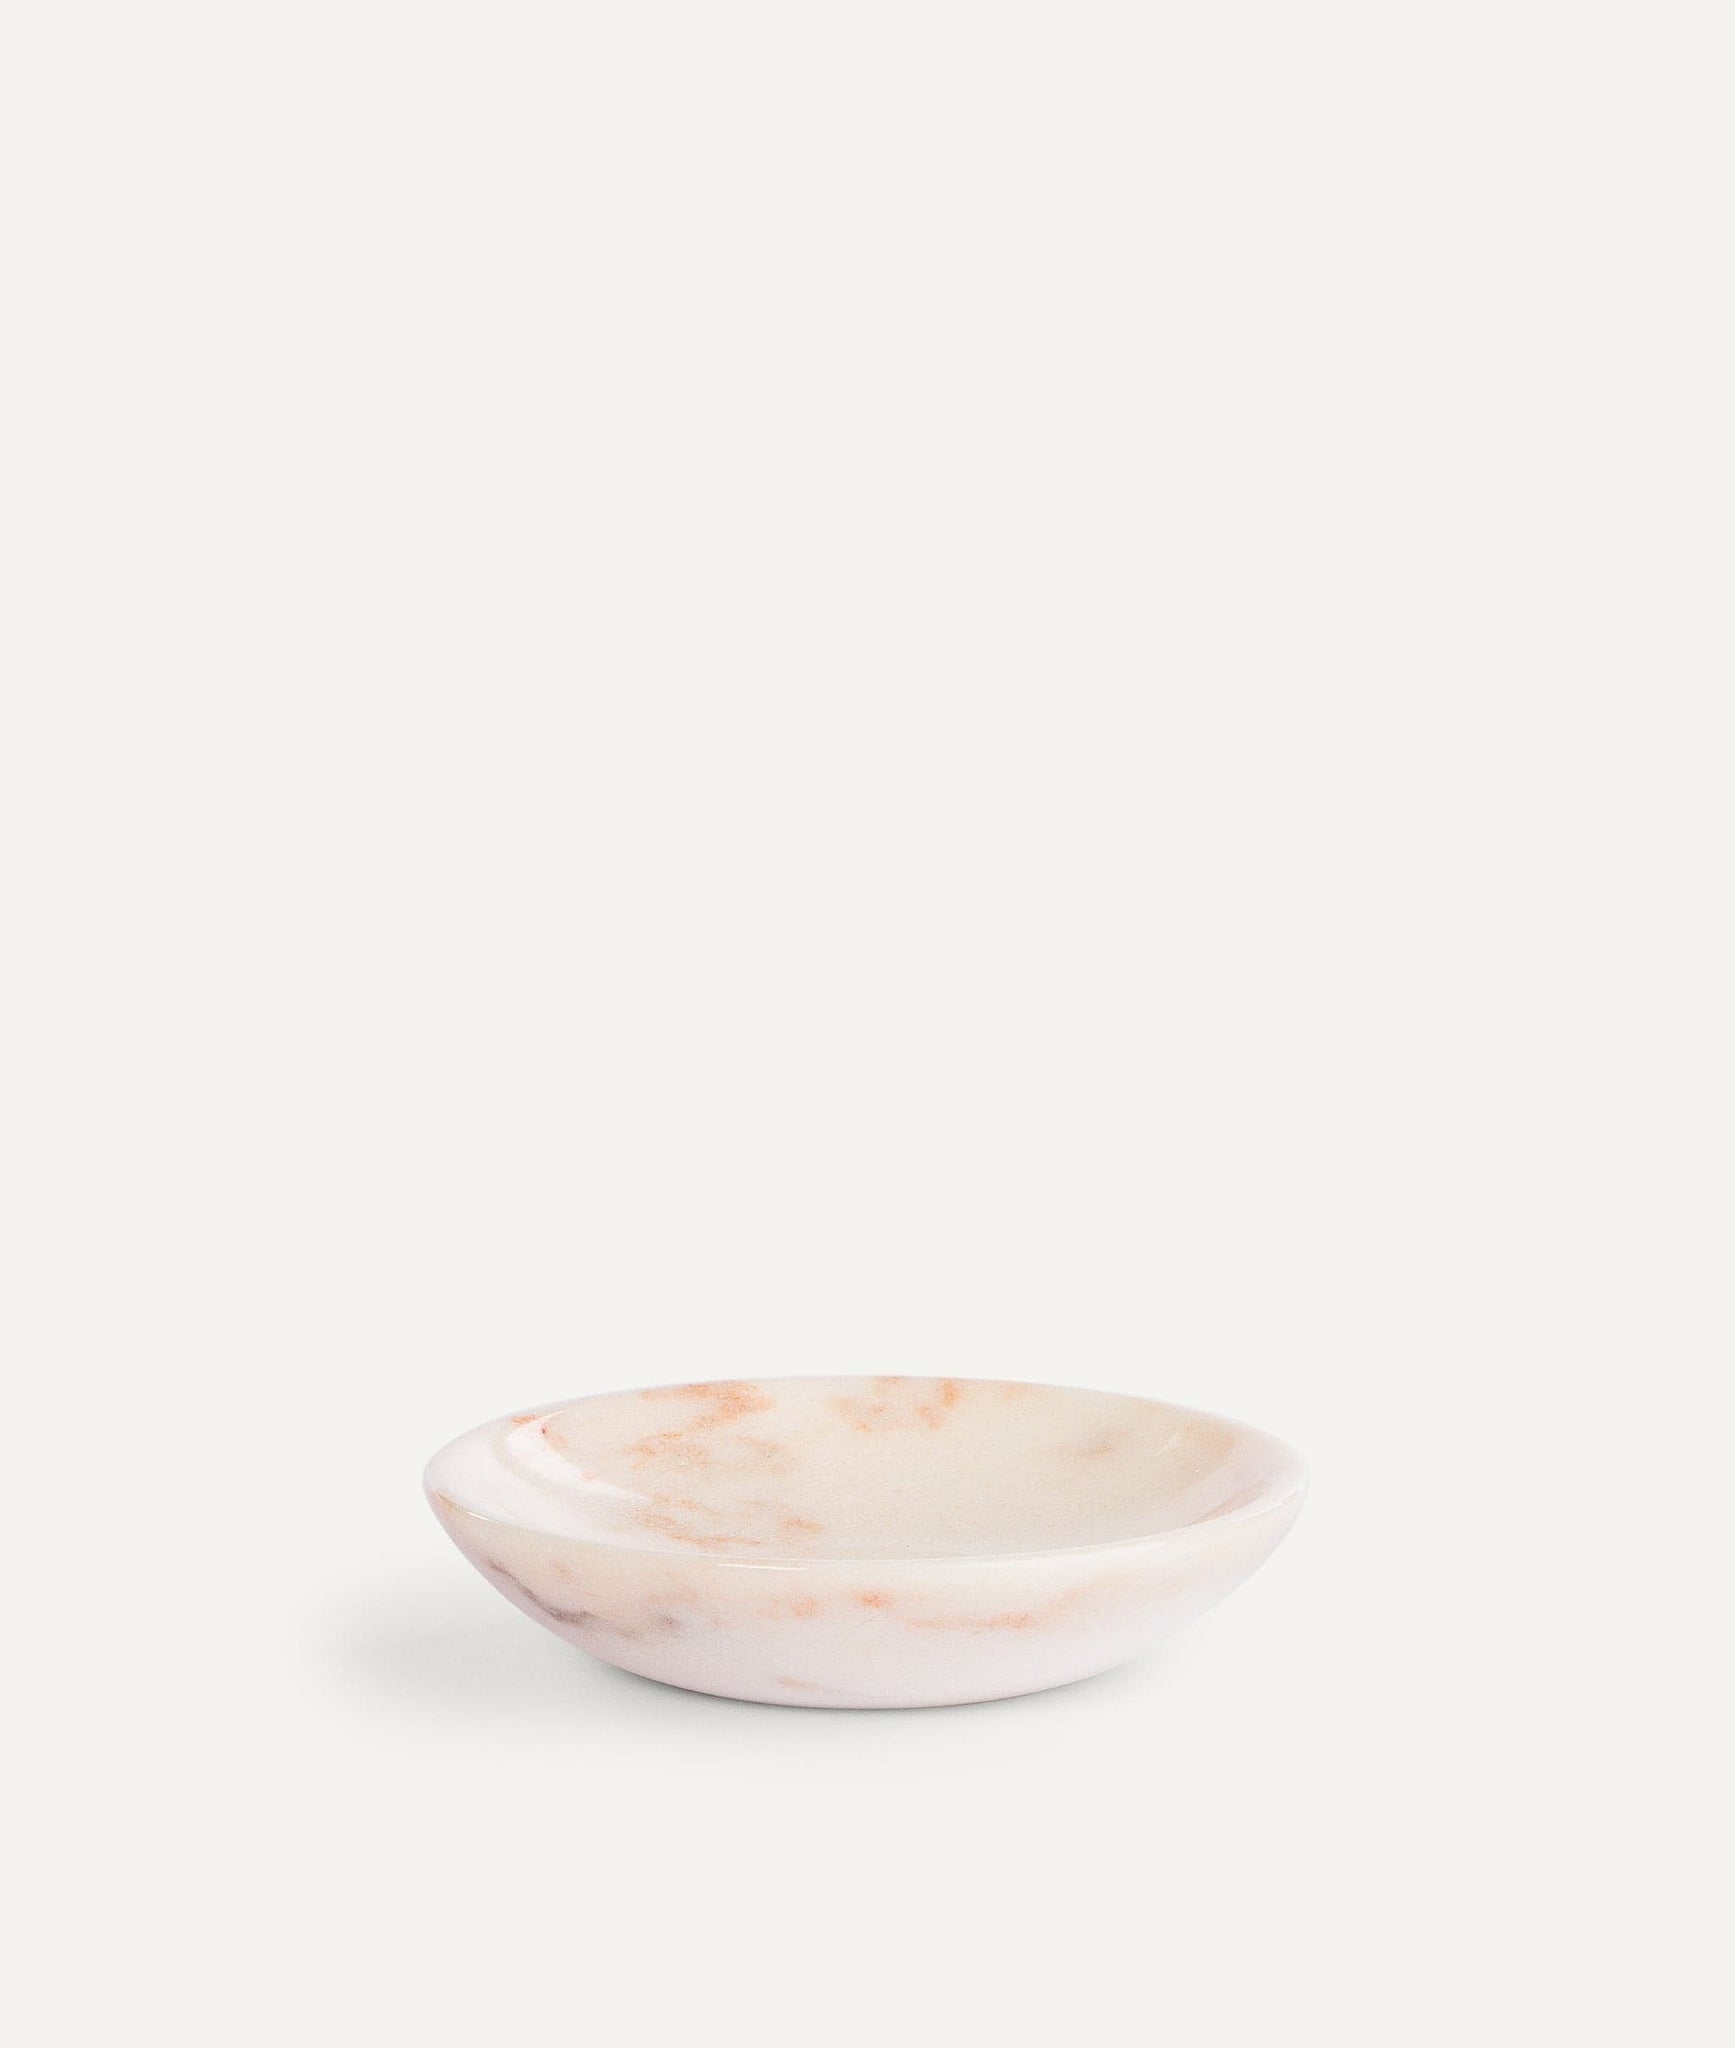 Small Bowl in Carrara Marble